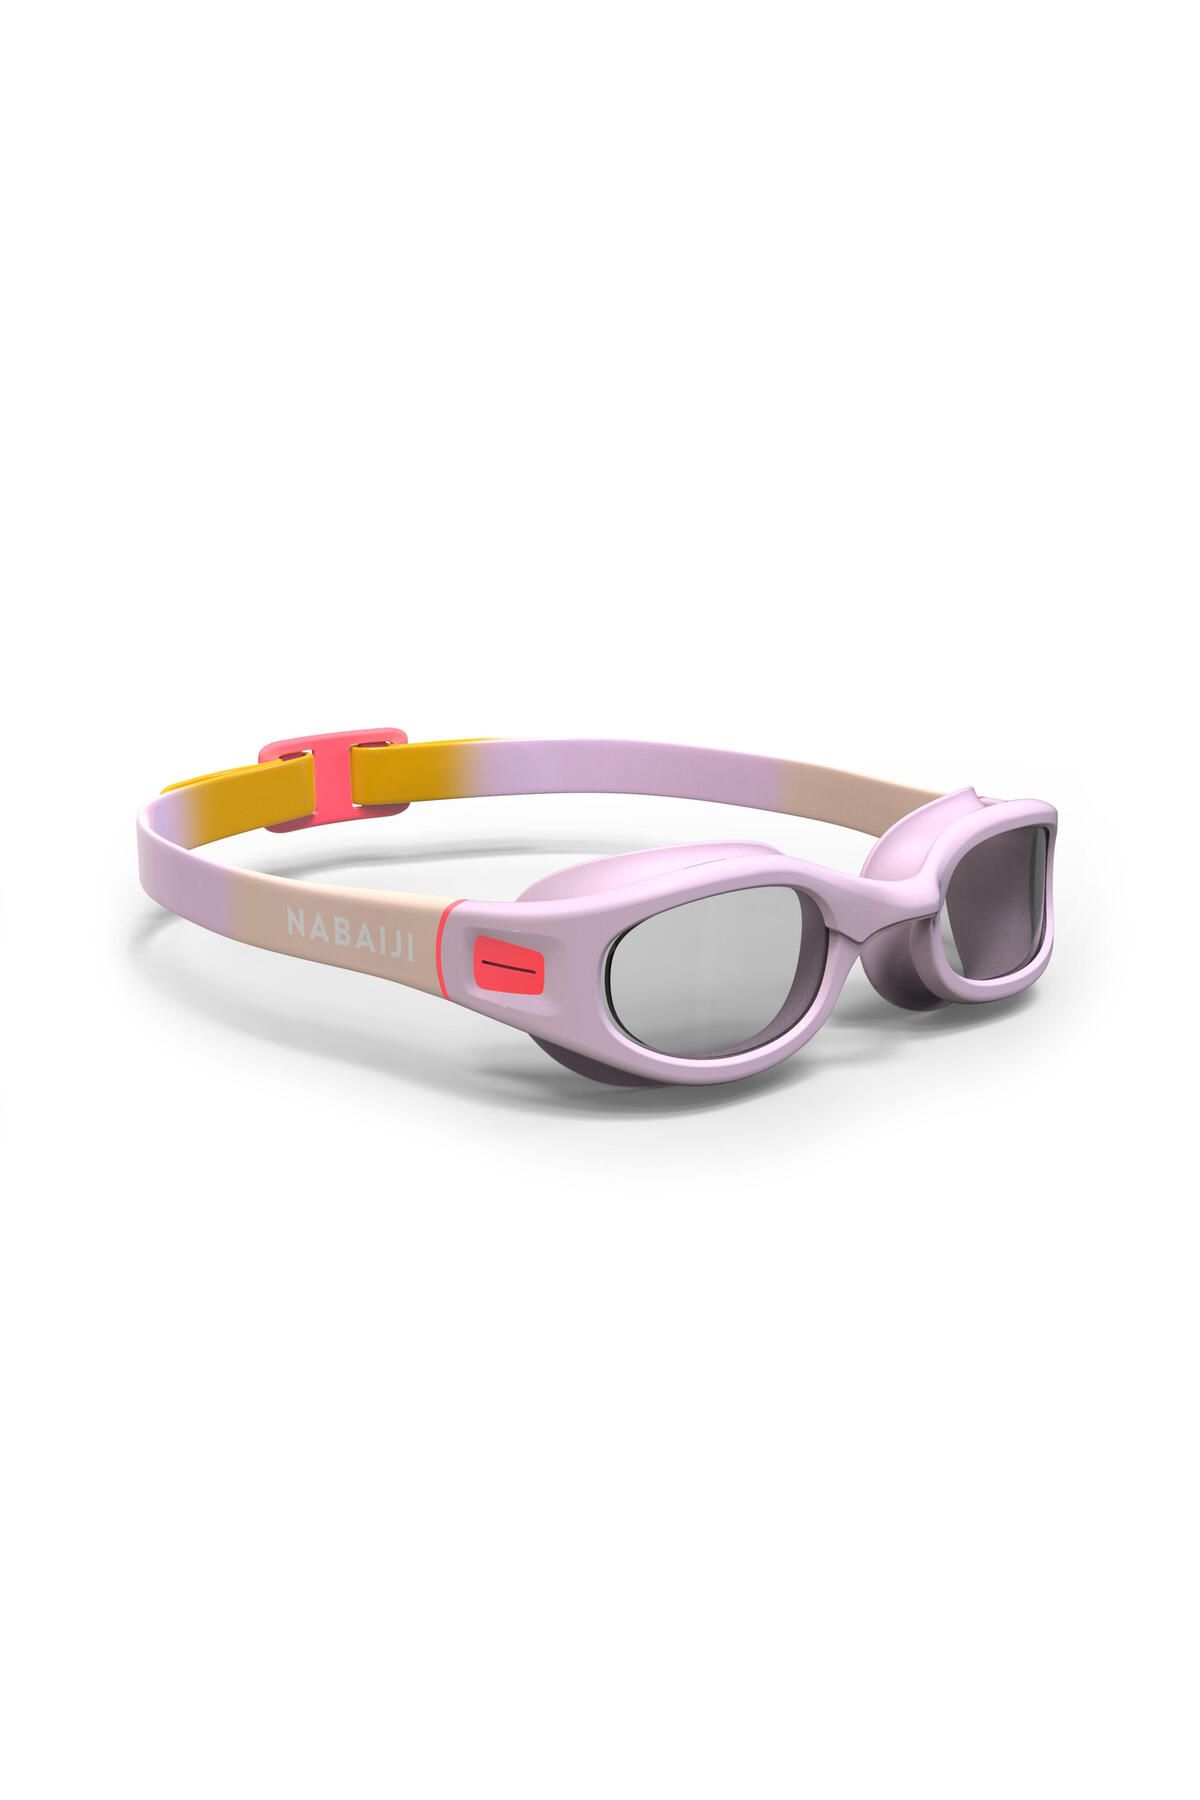 Decathlon Yüzücü Gözlüğü - S Boy - Pembe - Şeffaf Camlı - 100 Soft